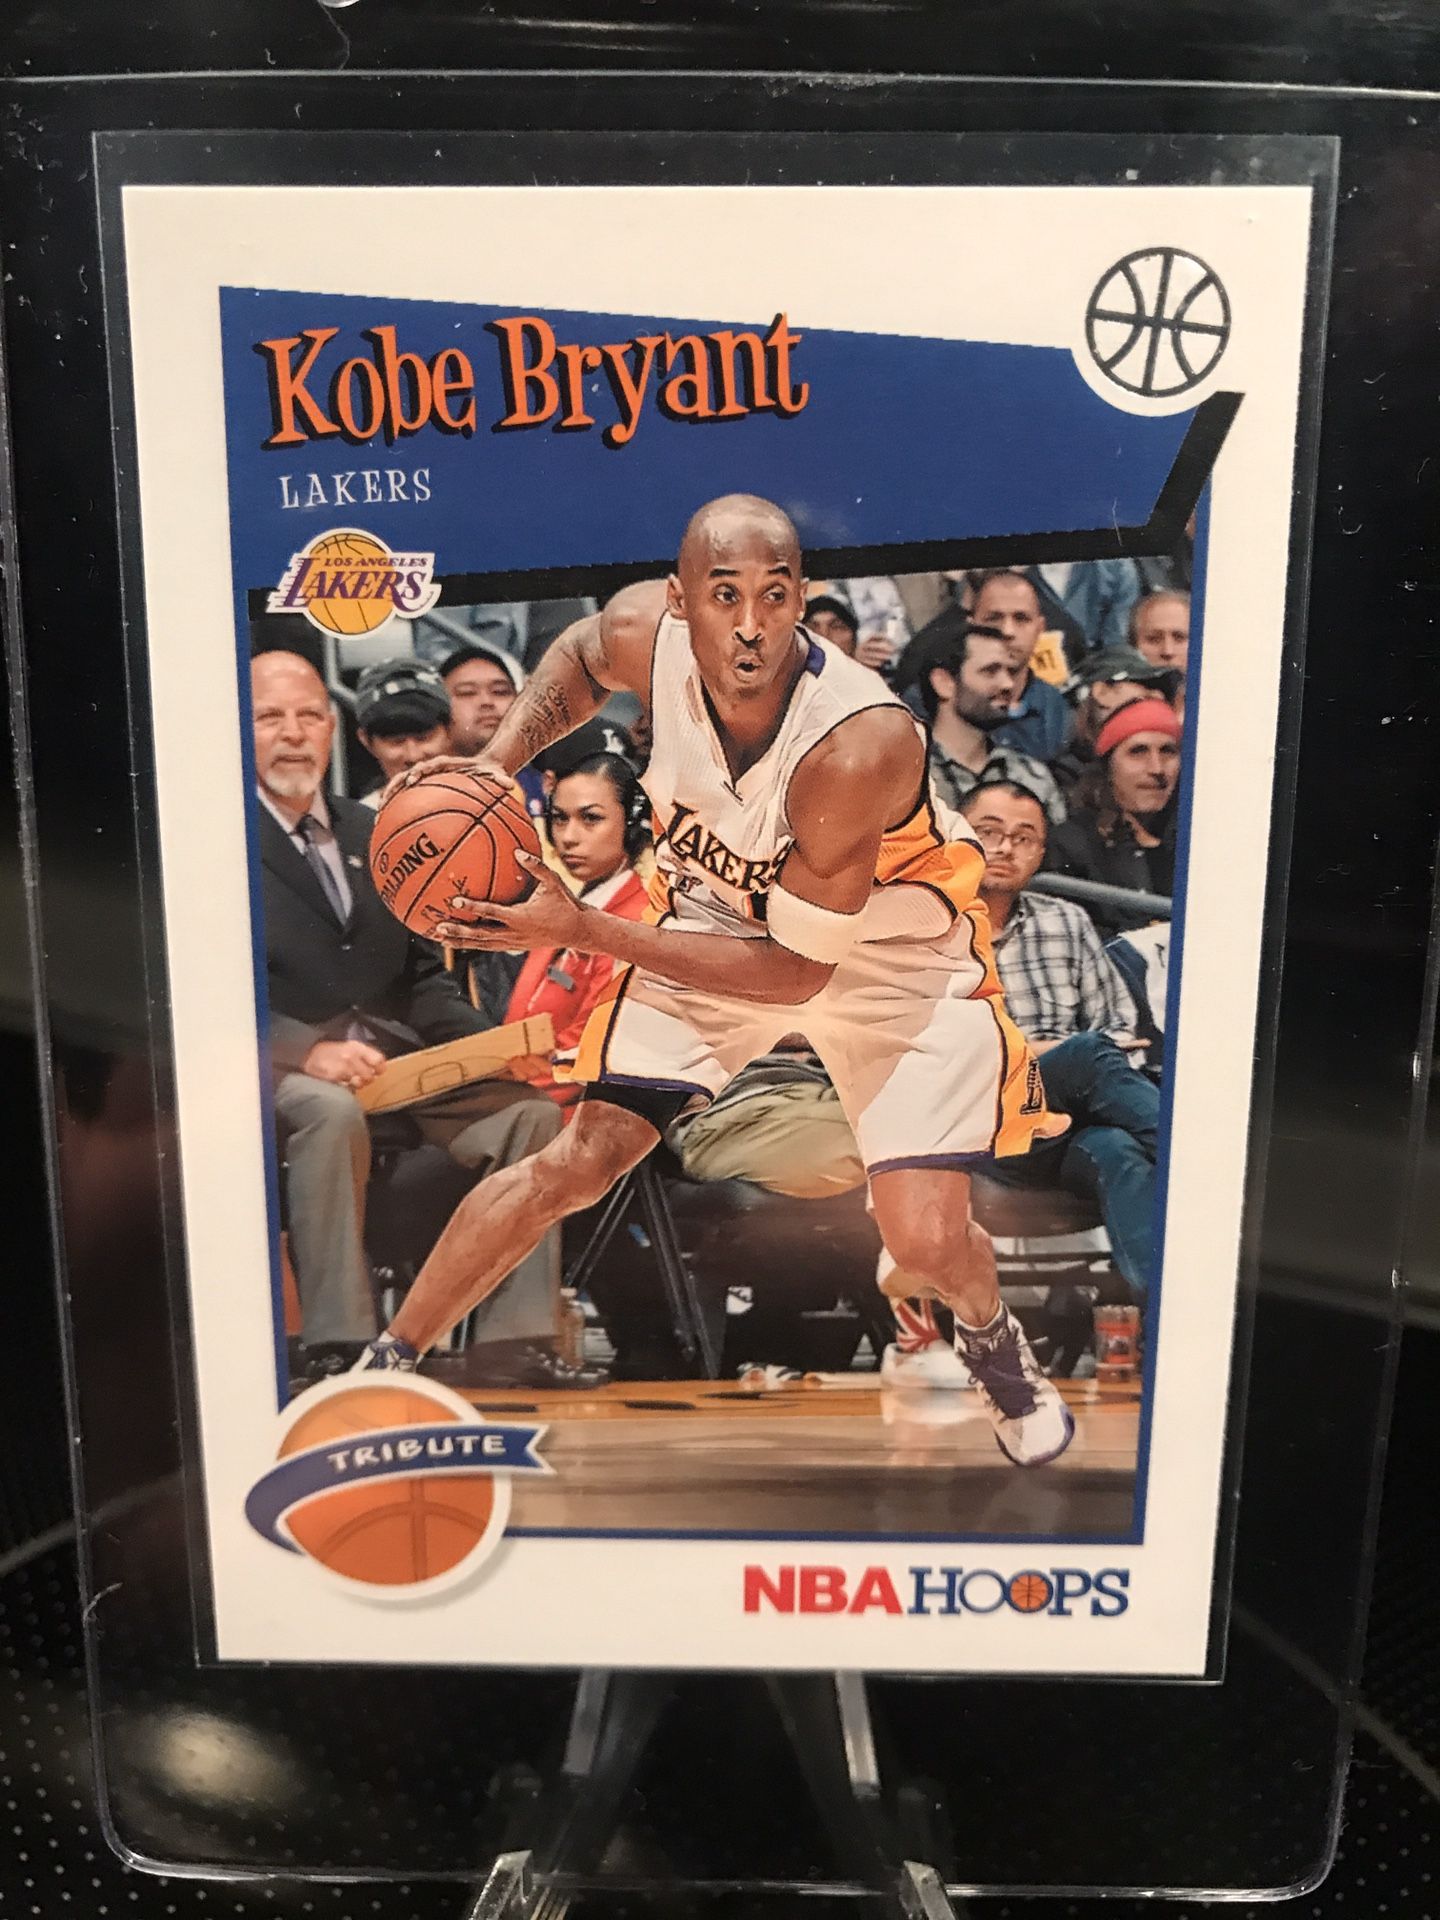 Panini NBA Hoops Kobe Bryant Basketball Card - Lakers Jersey 24 Collectibles - PSA Beckett BGS 9 or 10 GEM MINT ? - $12 OBO